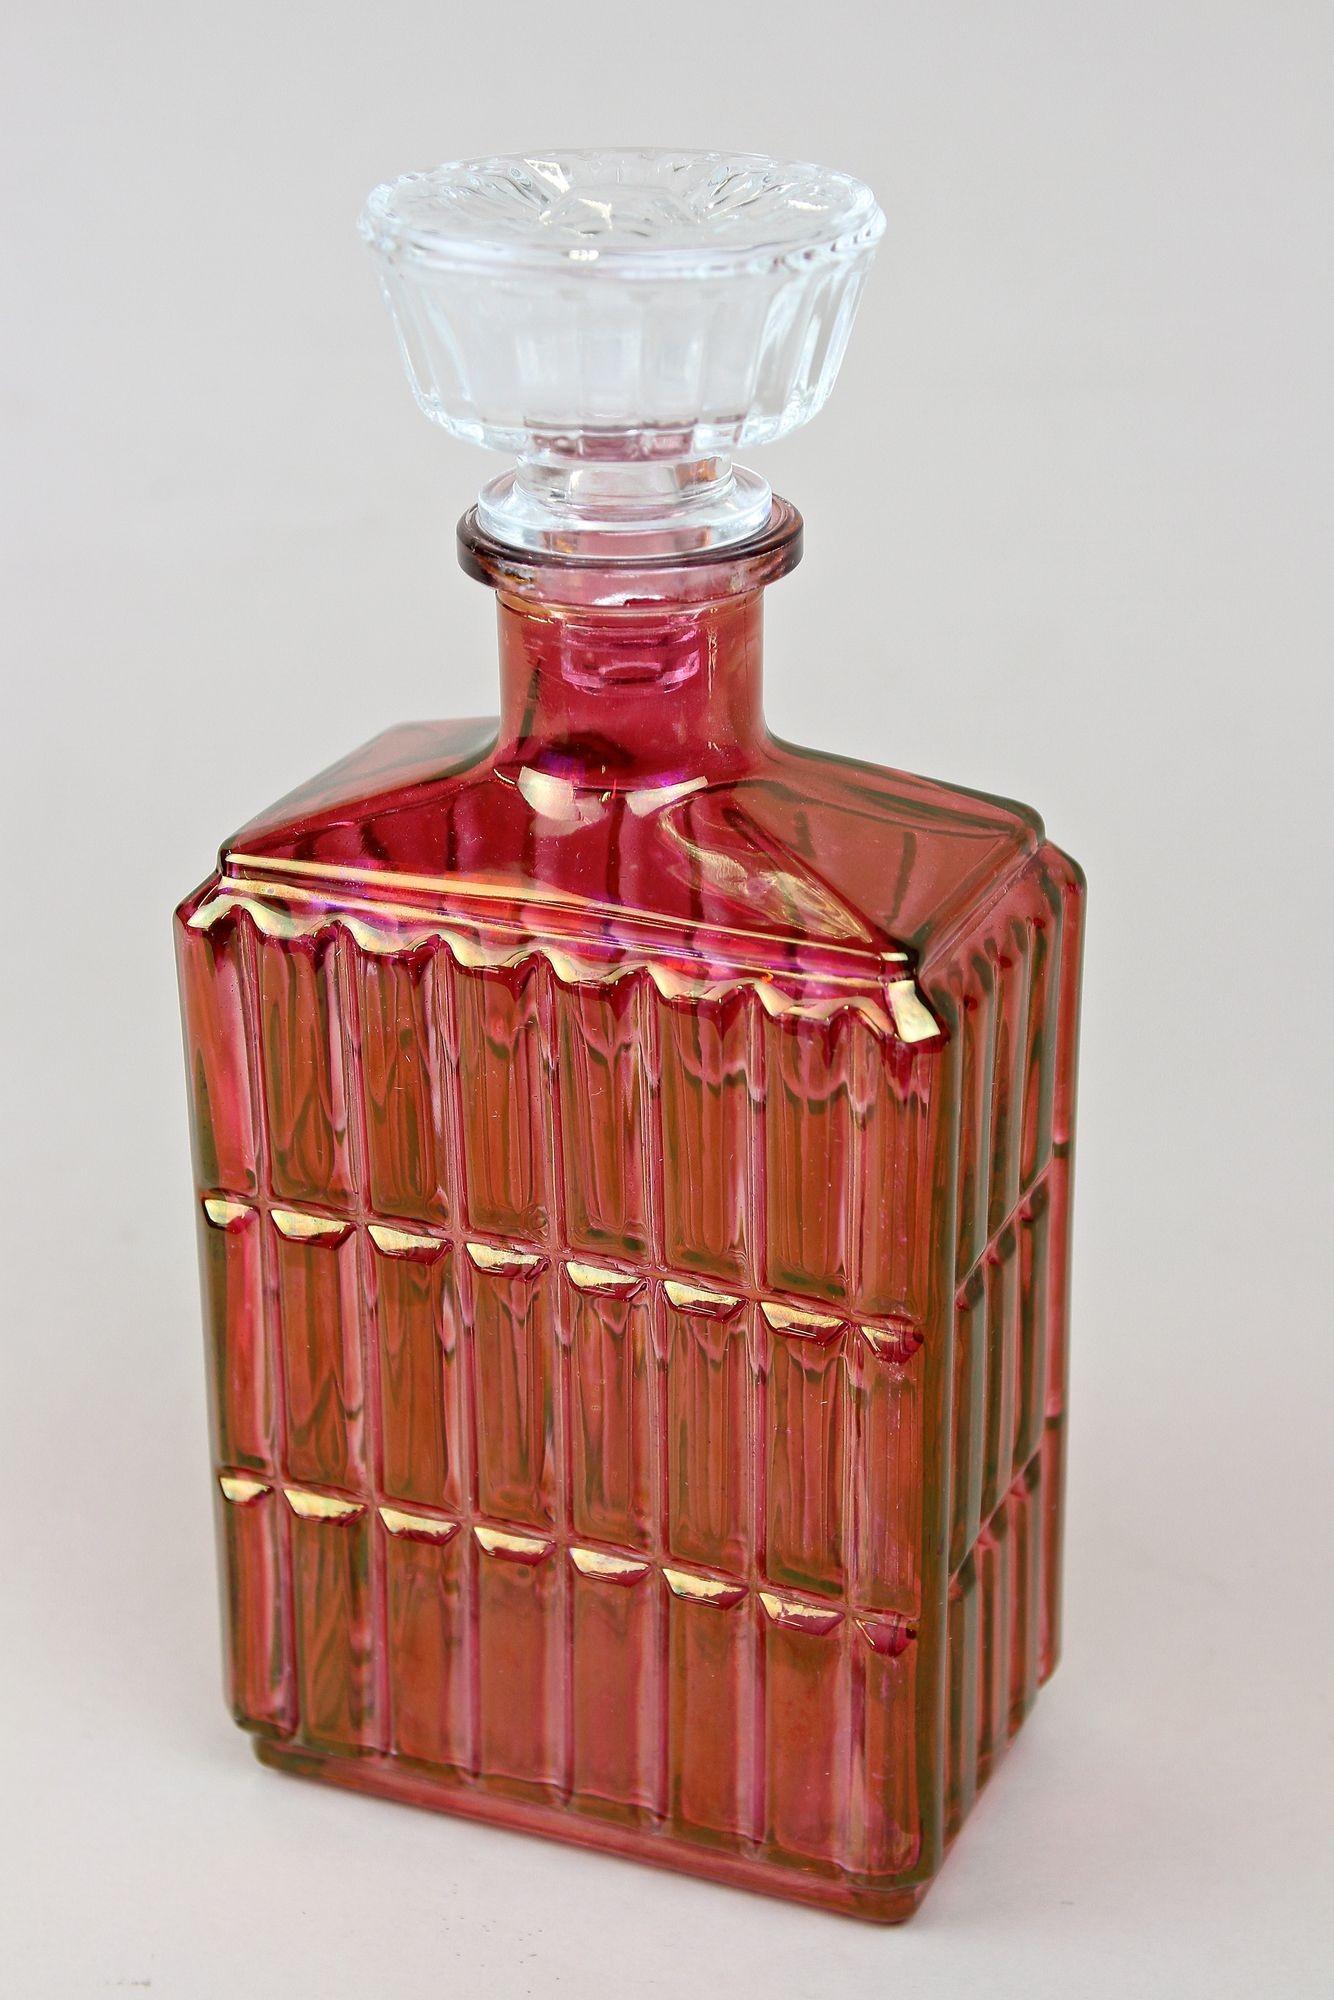 20th Century Art Deco Glass Decanter or Liquor Bottle, Austria ca. 1930 For Sale 2